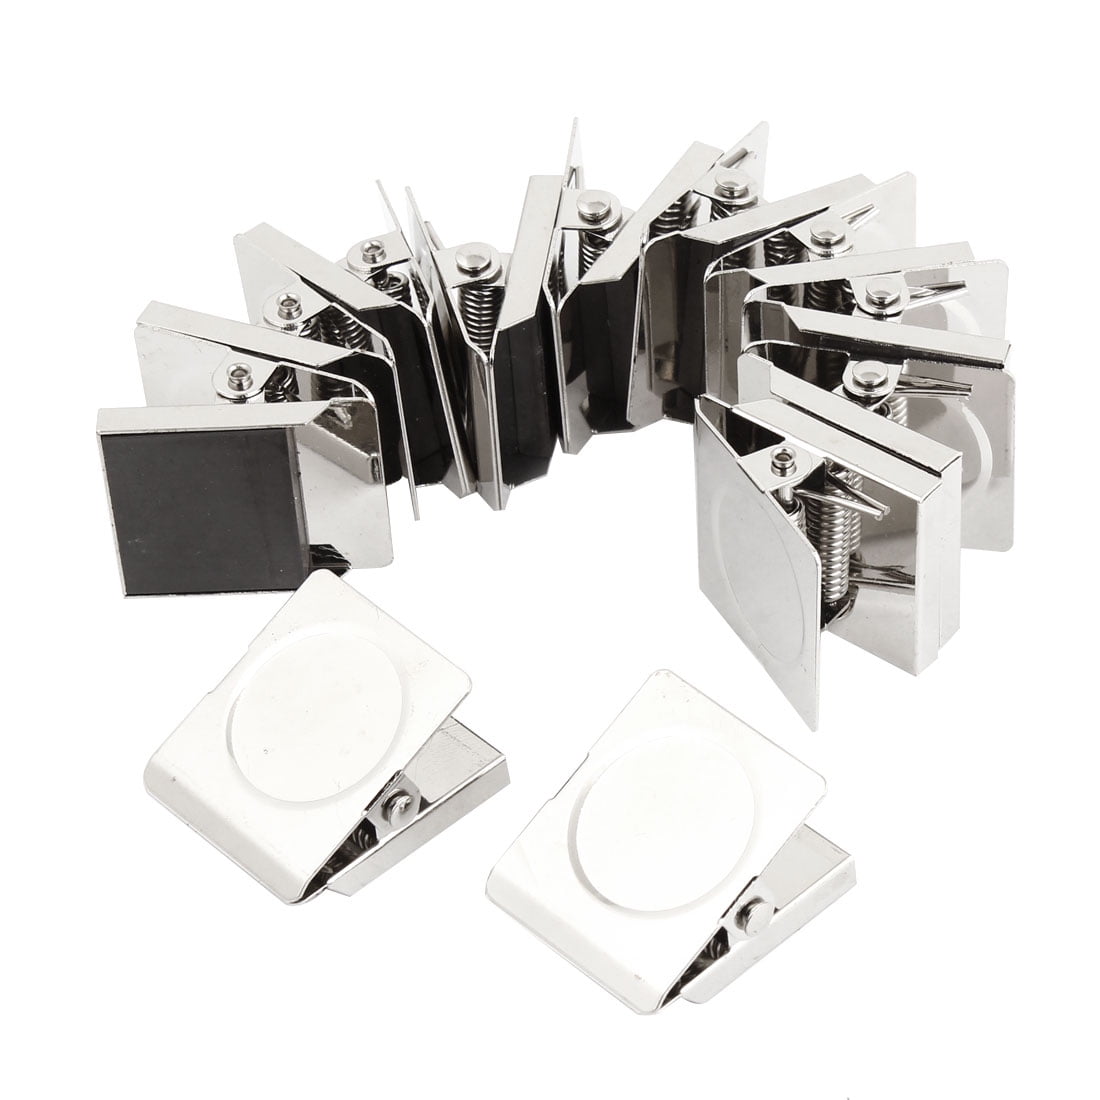 2 x Premium Magnetic Clip Fridge Paper/Memo/Quick Message Holder Home Office 